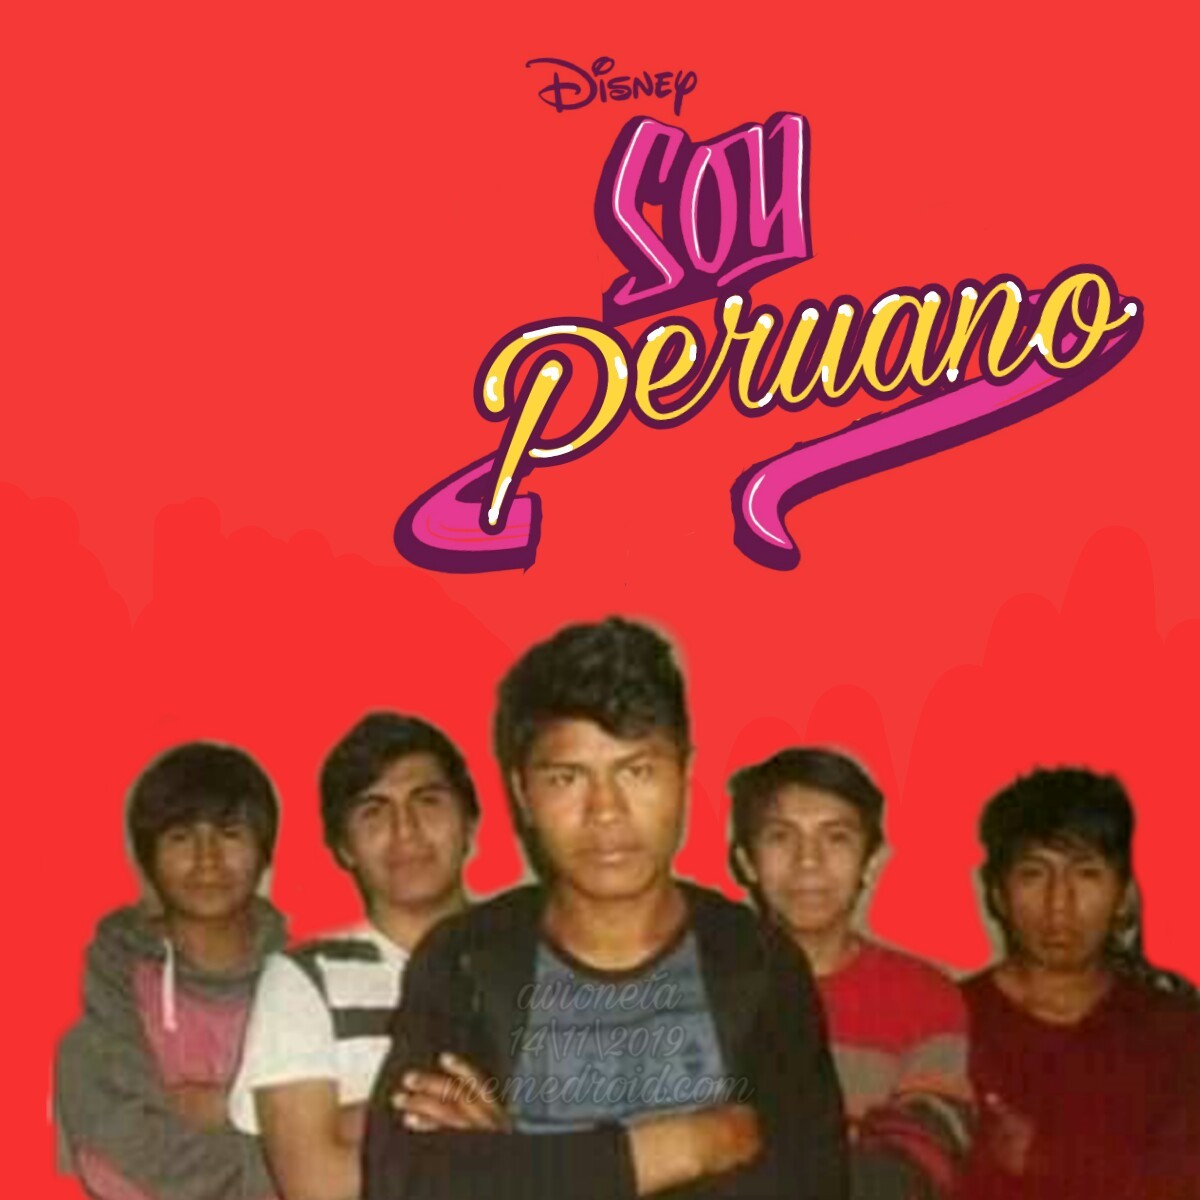 Peruanos, una raza superior - meme